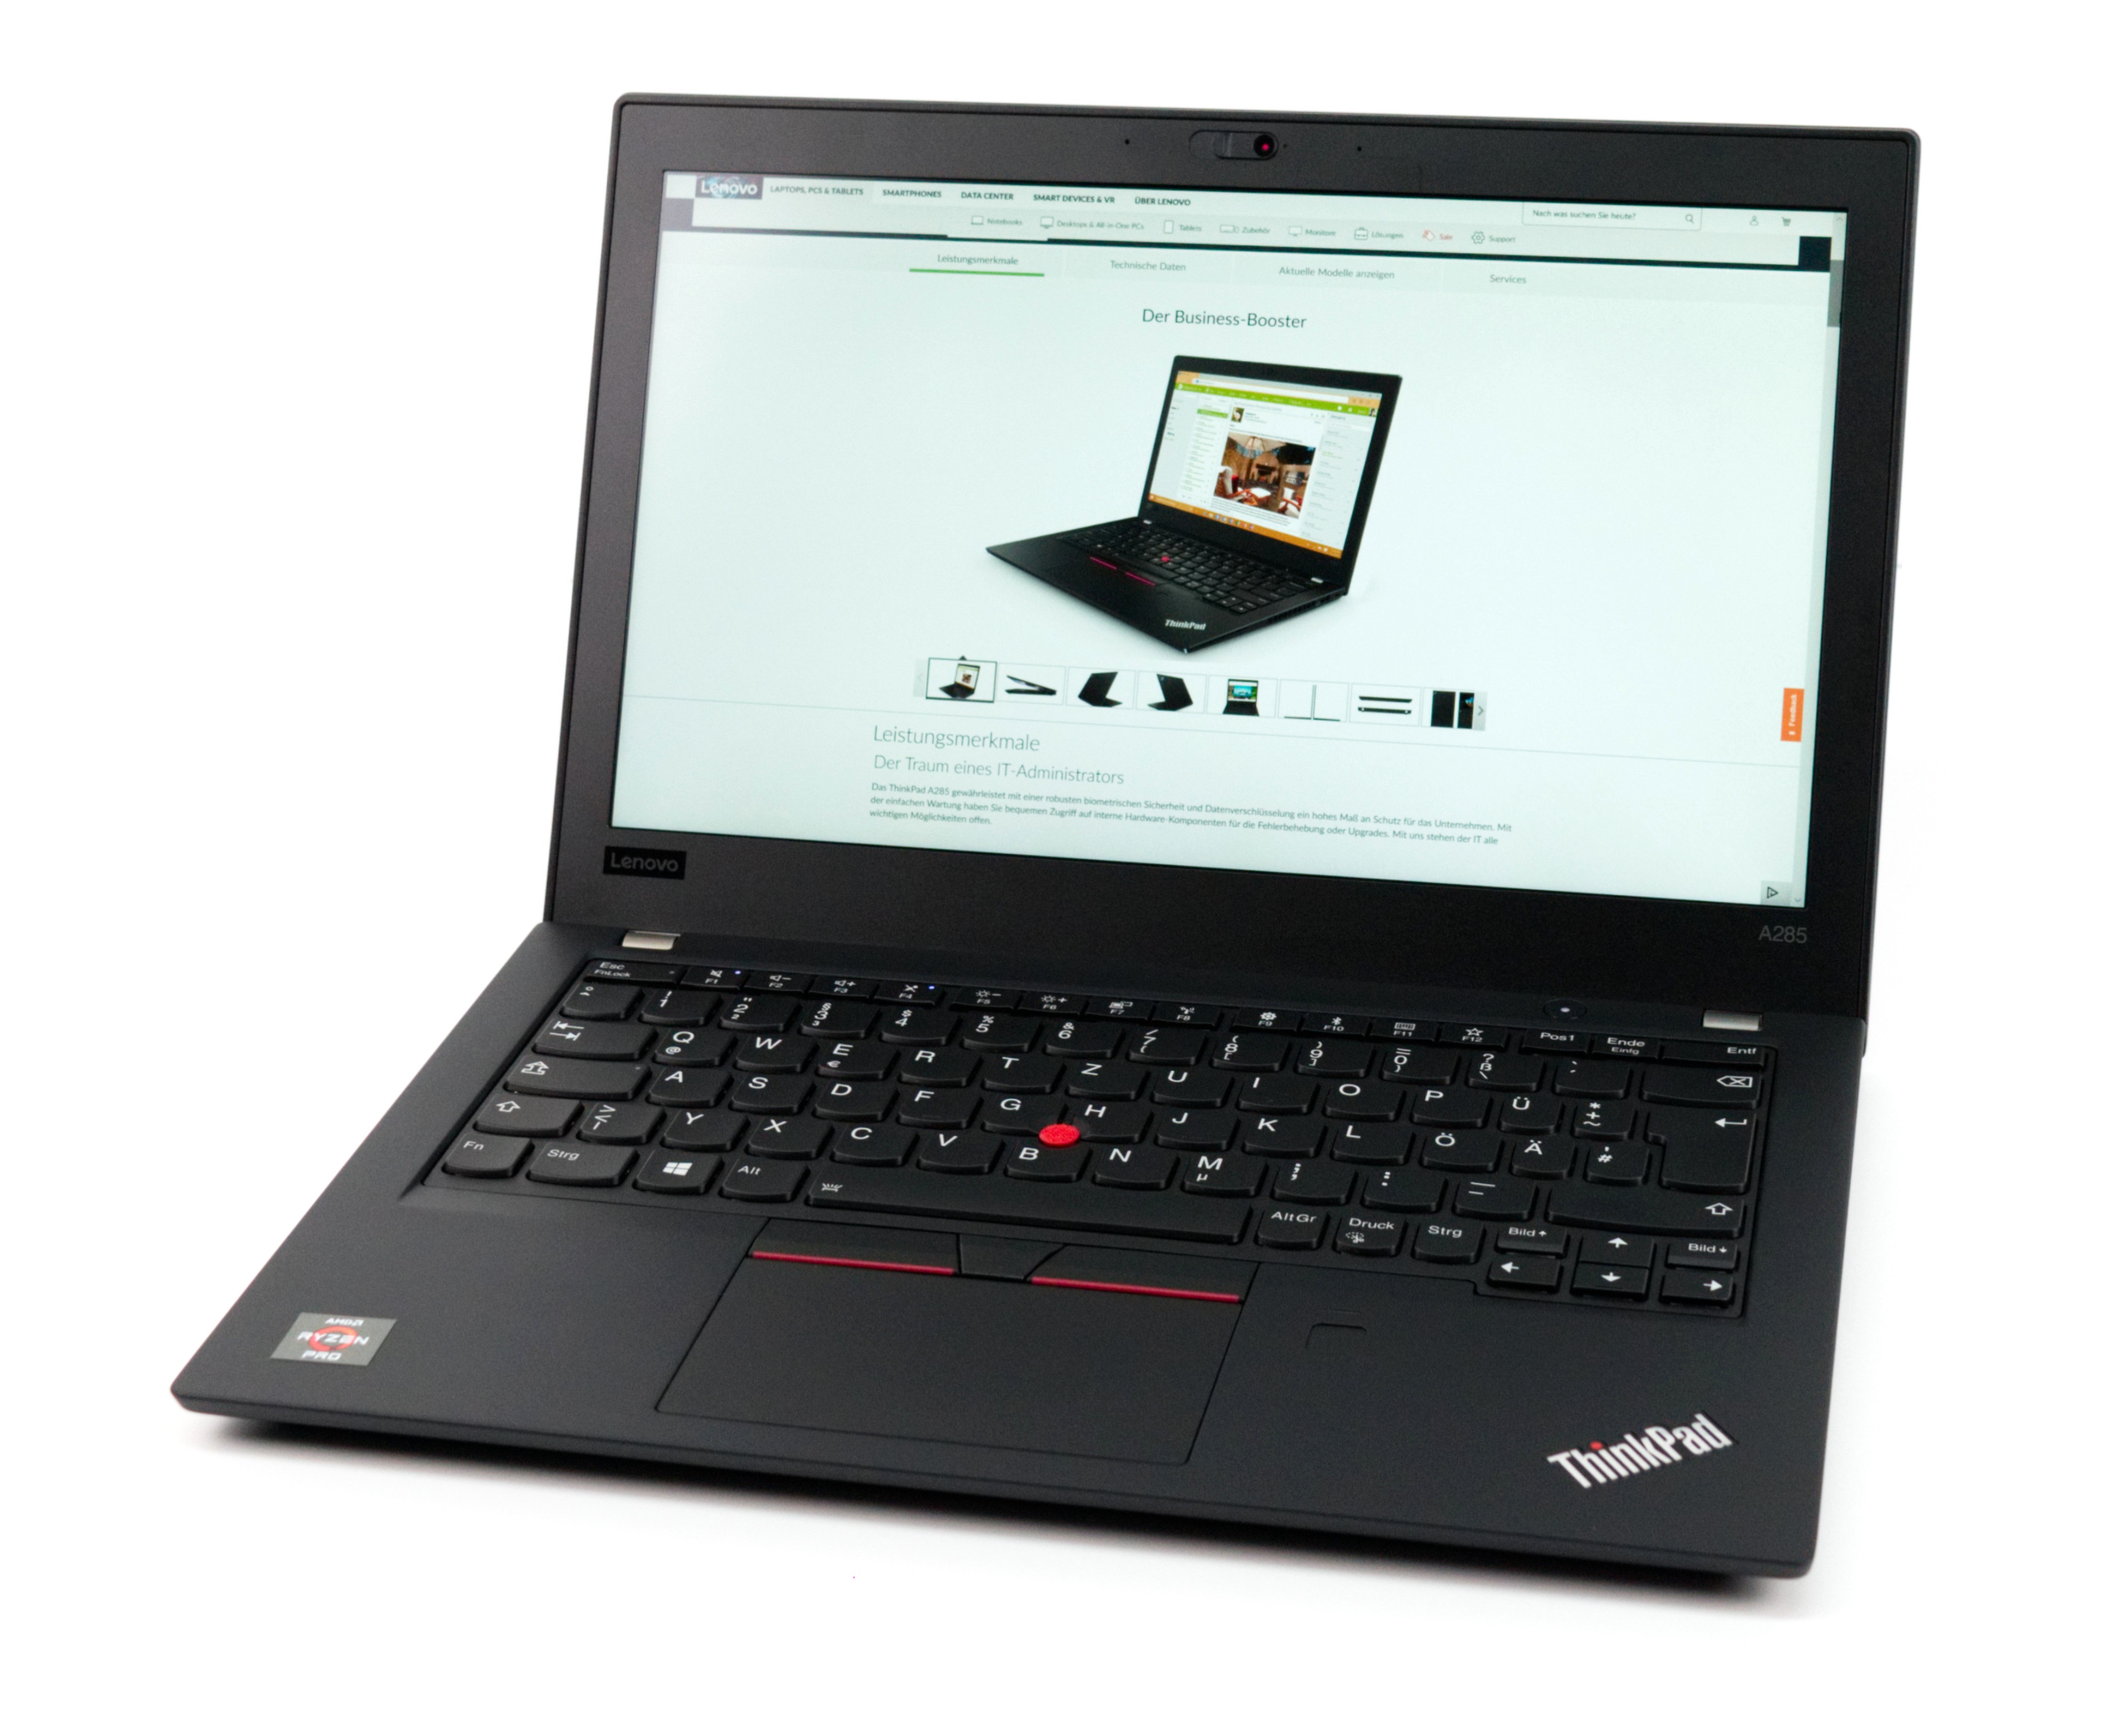 Lenovo ThinkPad A285 (Ryzen 5 Pro, Vega 8, FHD) Laptop Review